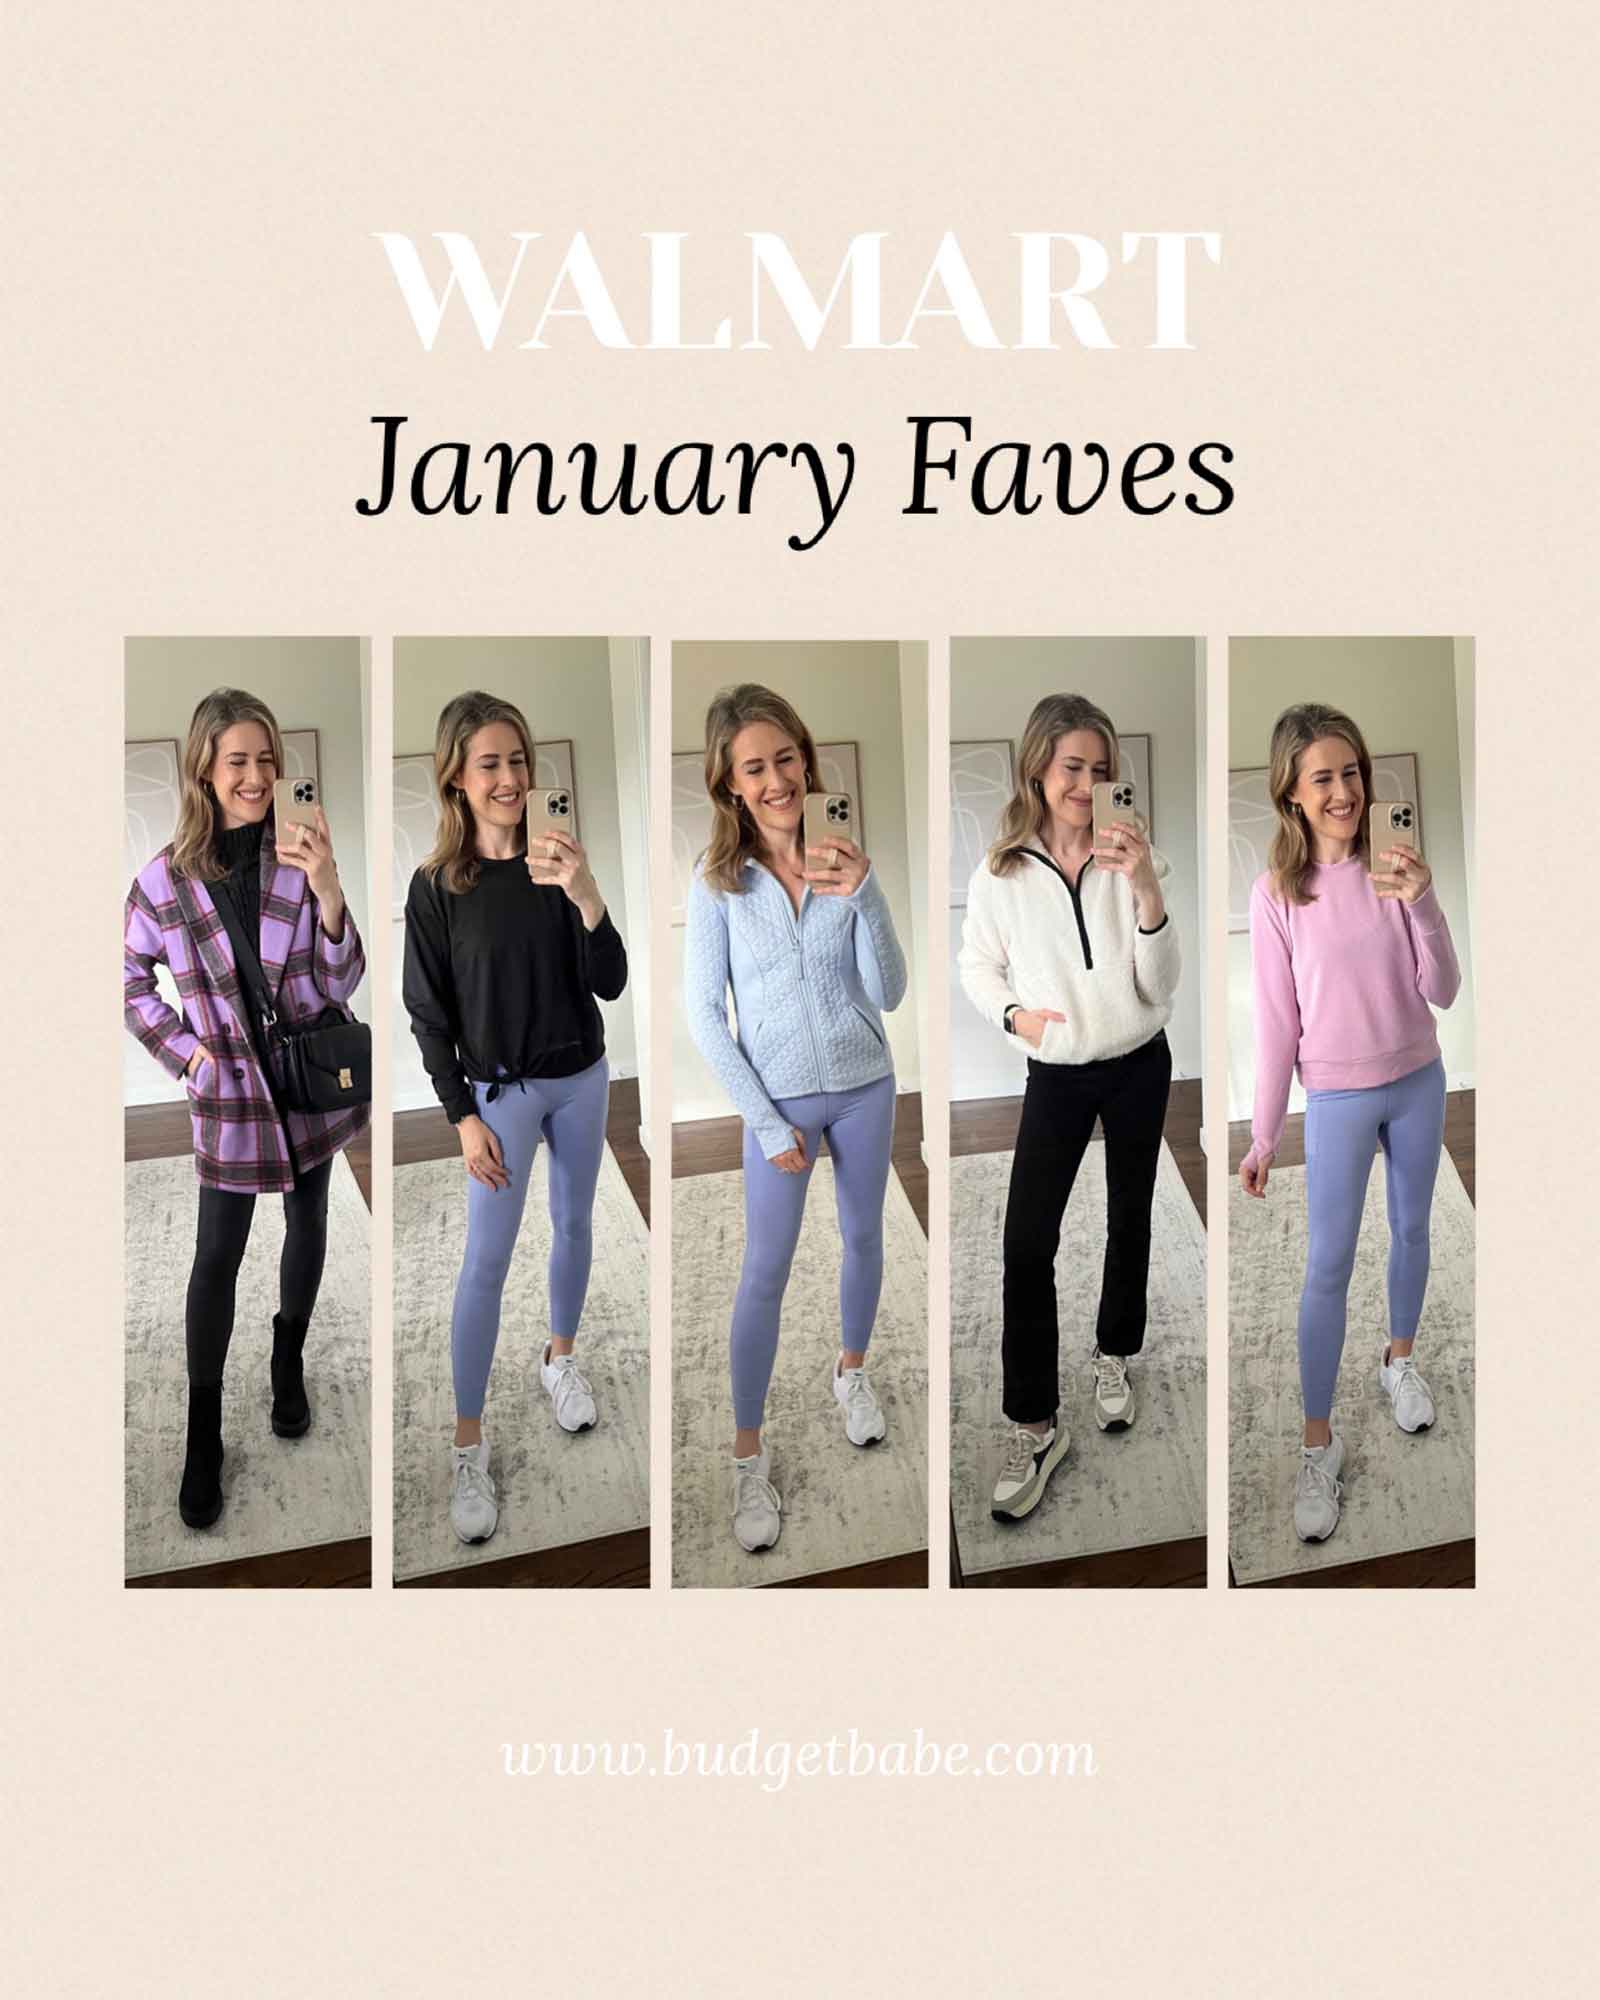 Walmart January favorites